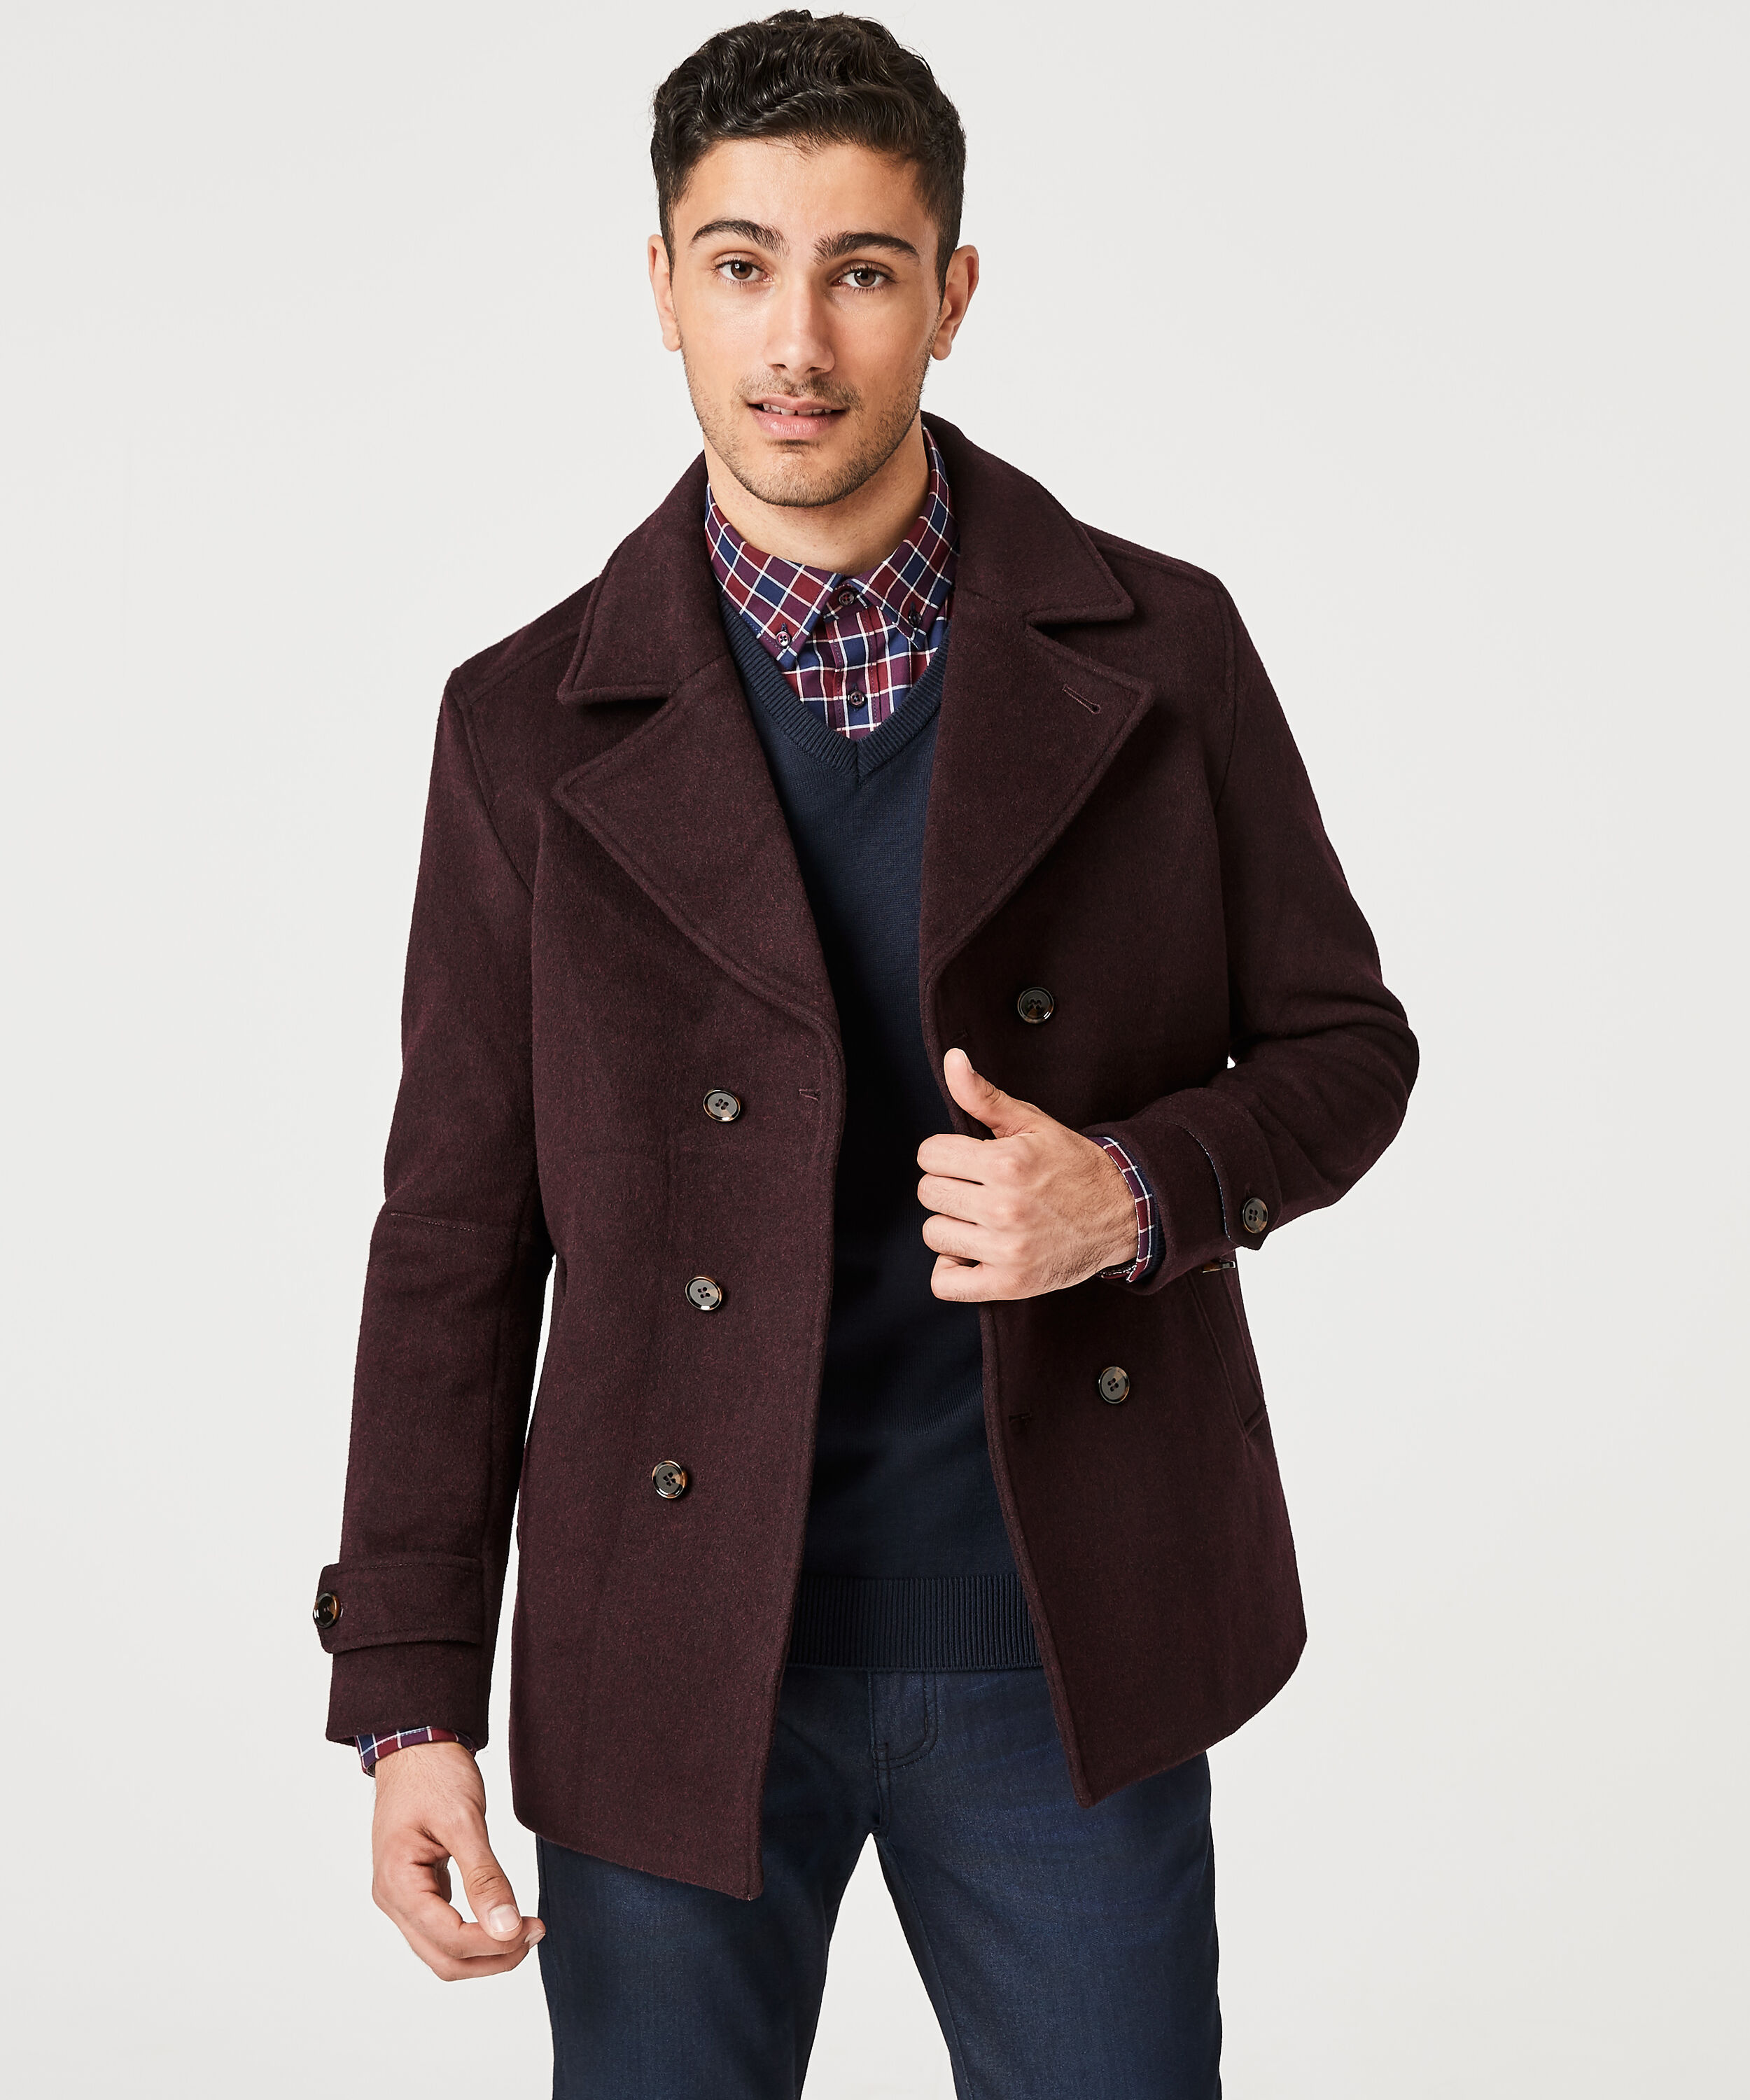 Aspiring - Burgundy - Db Peacoat Blended Wool Coats & Jackets | Politix